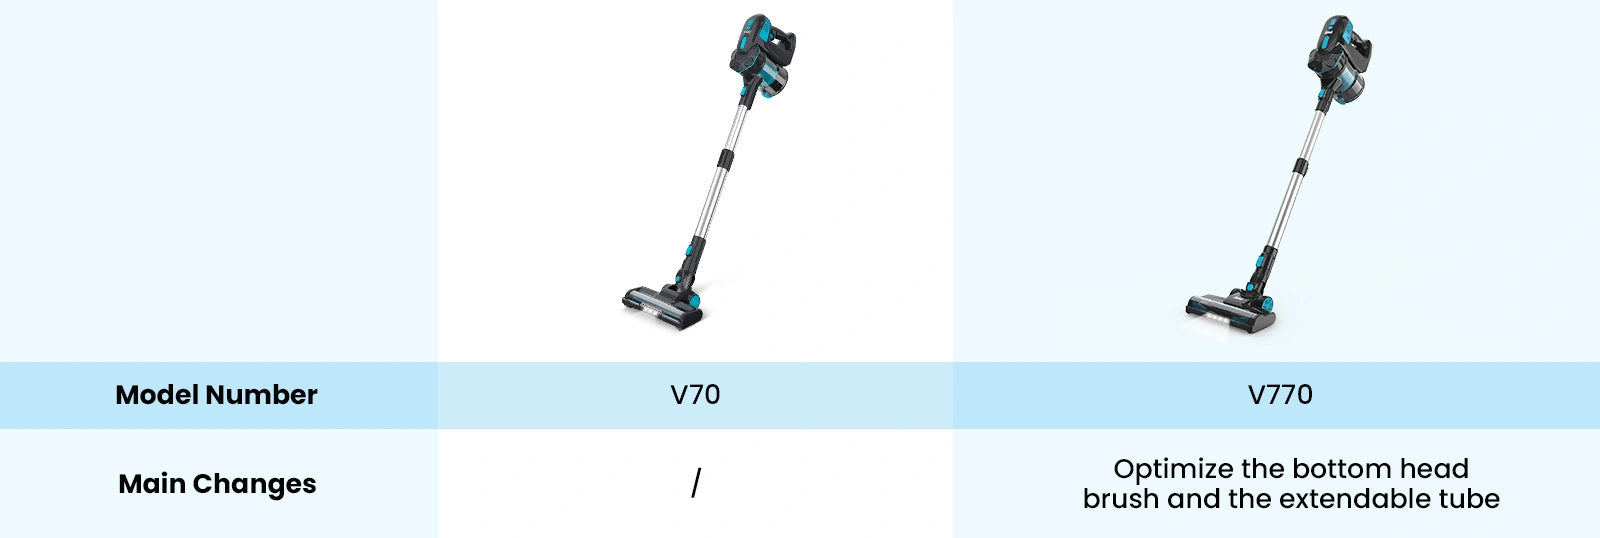 inse_v770_cordless_stick_vacuum_and_inse_v70_cordless_stick_vacuum_comparison_for_desktop